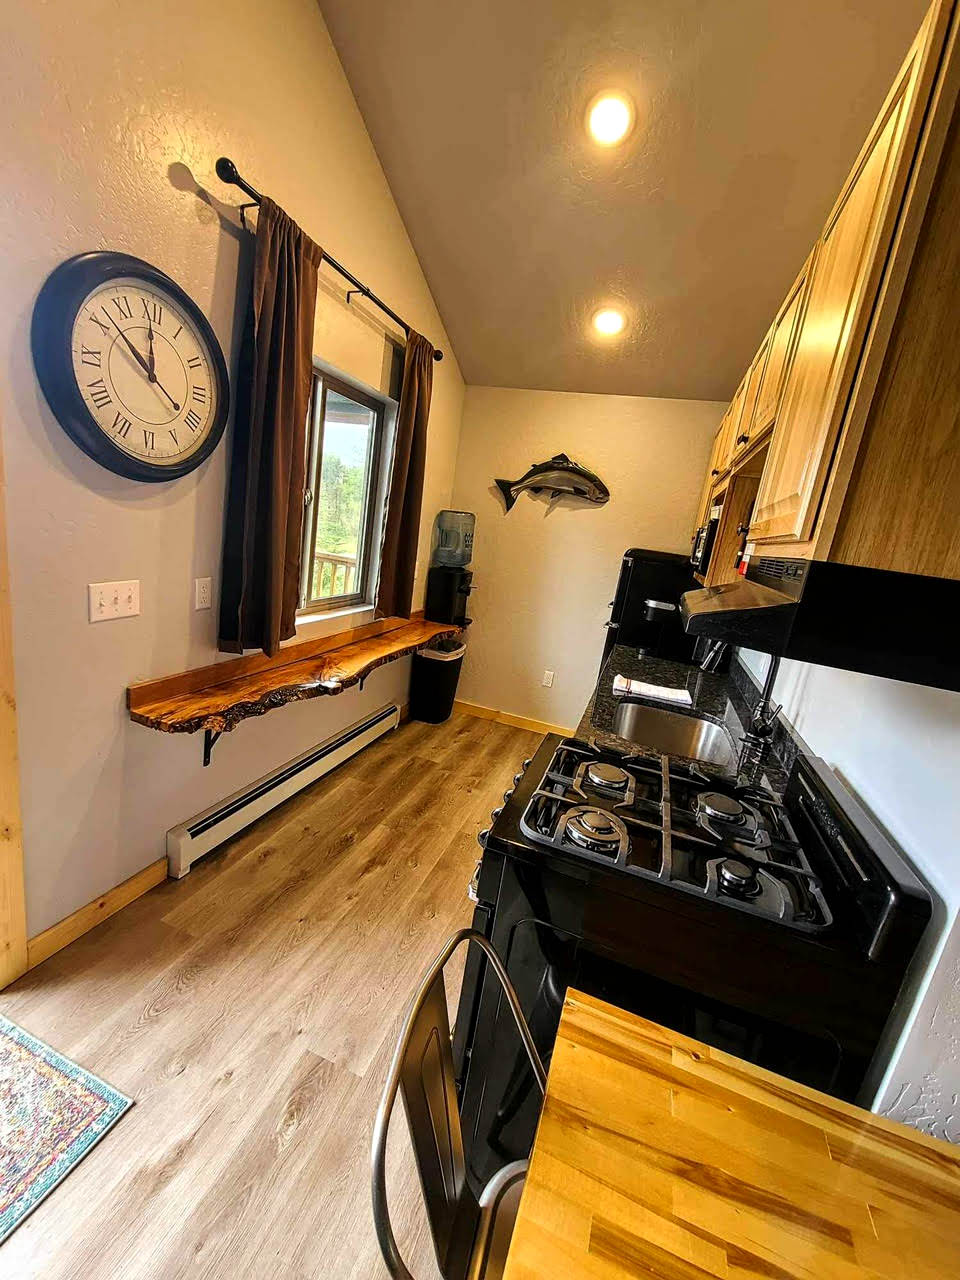 Alternate View of Kitchen inside Cabin